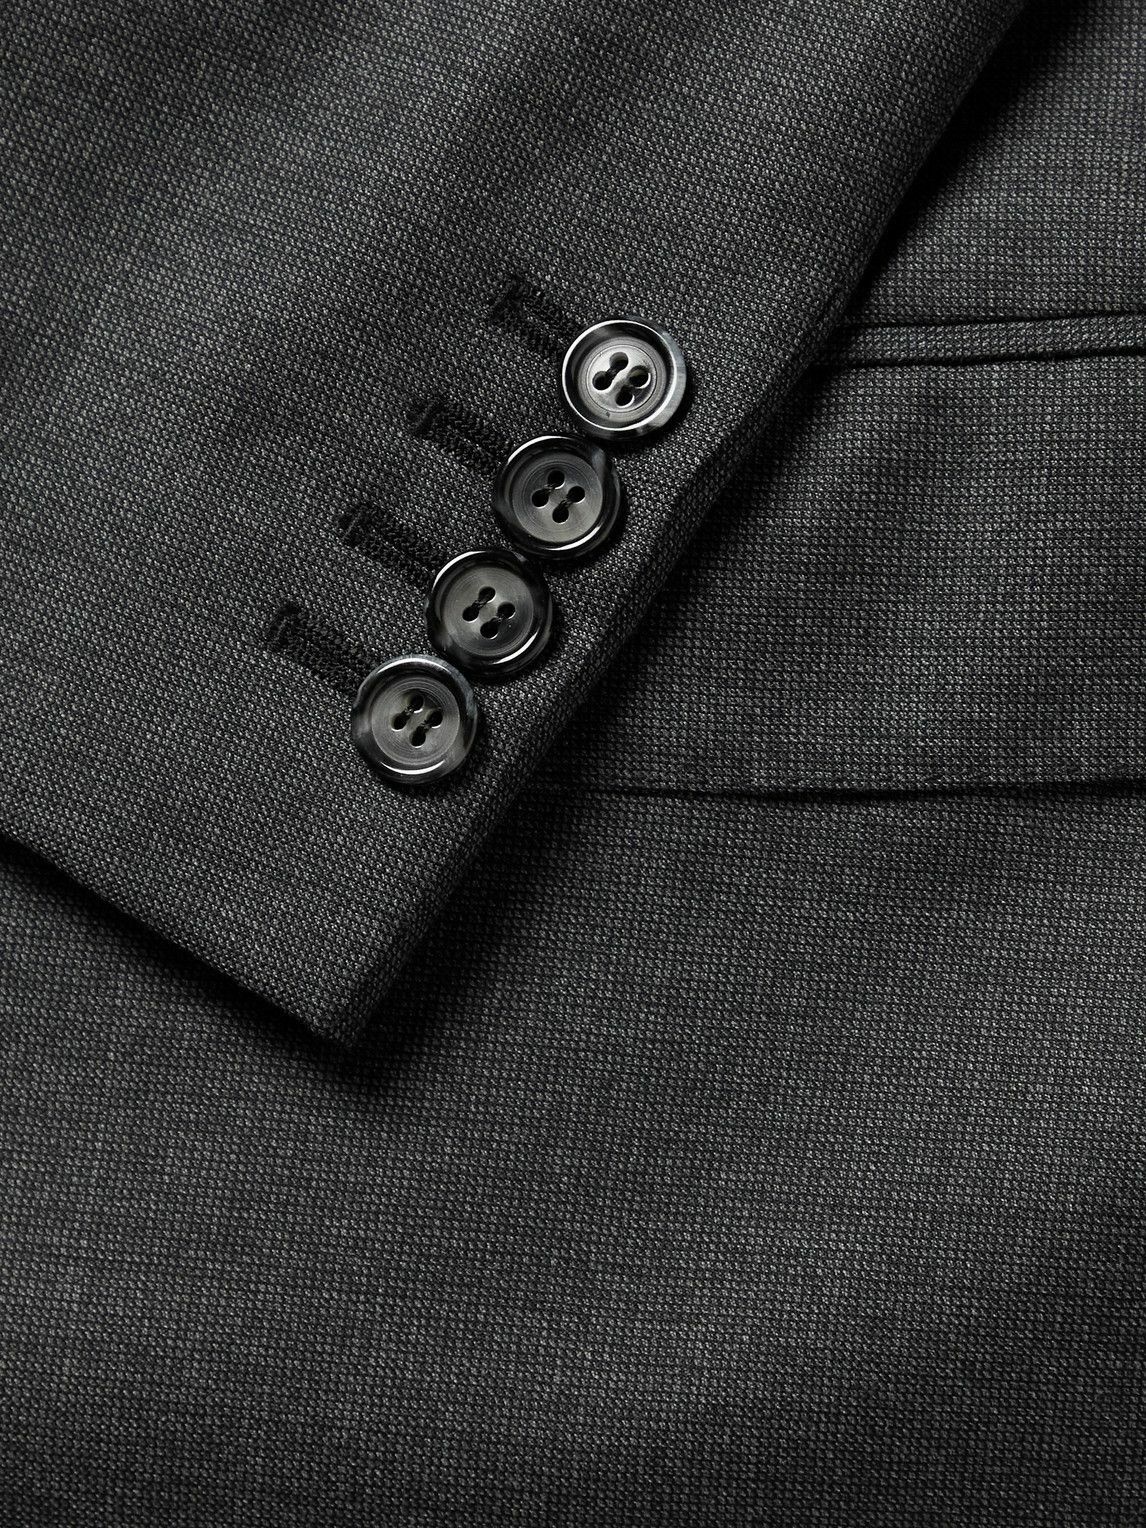 Brioni - Slim-Fit Wool Suit - Gray Brioni